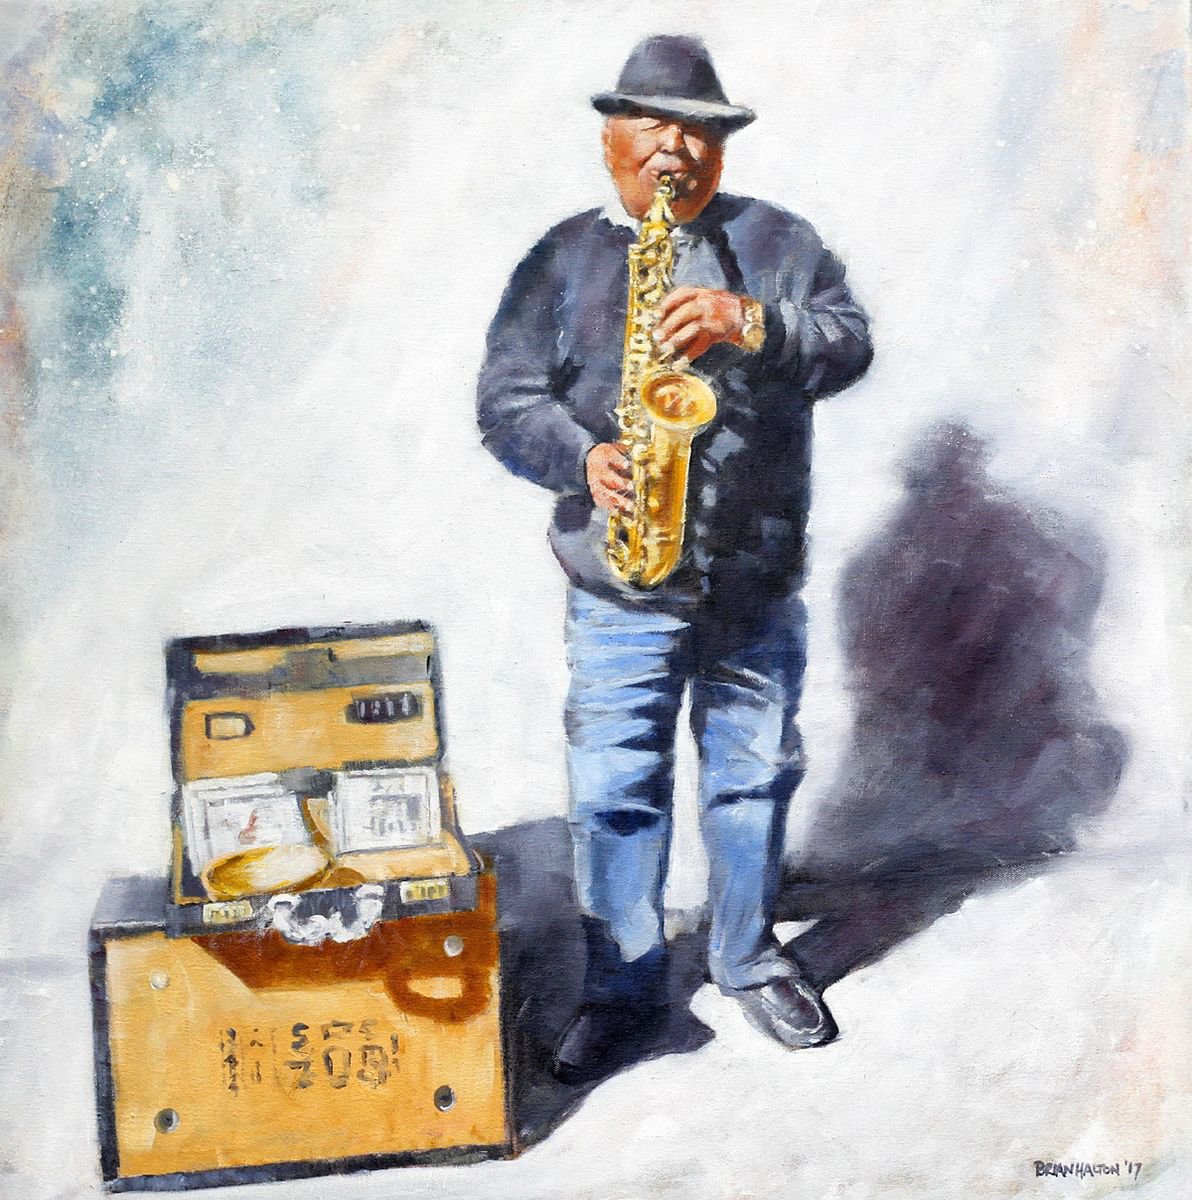 Sax Player by Brian Halton